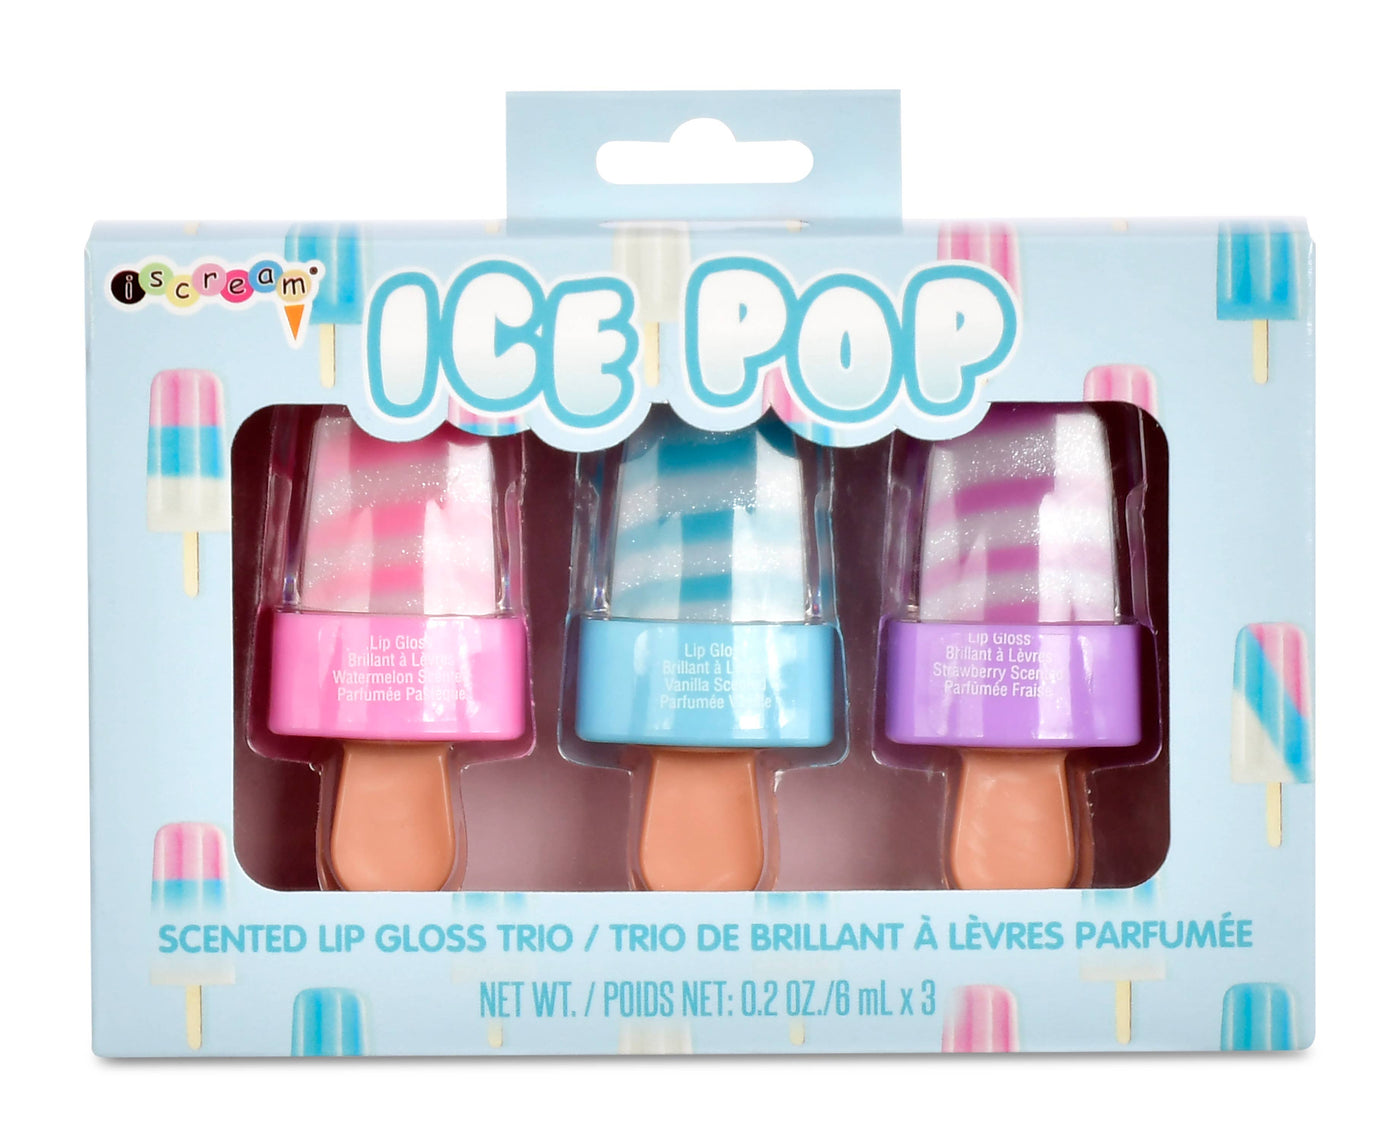 Ice Pop Lip Gloss Trio